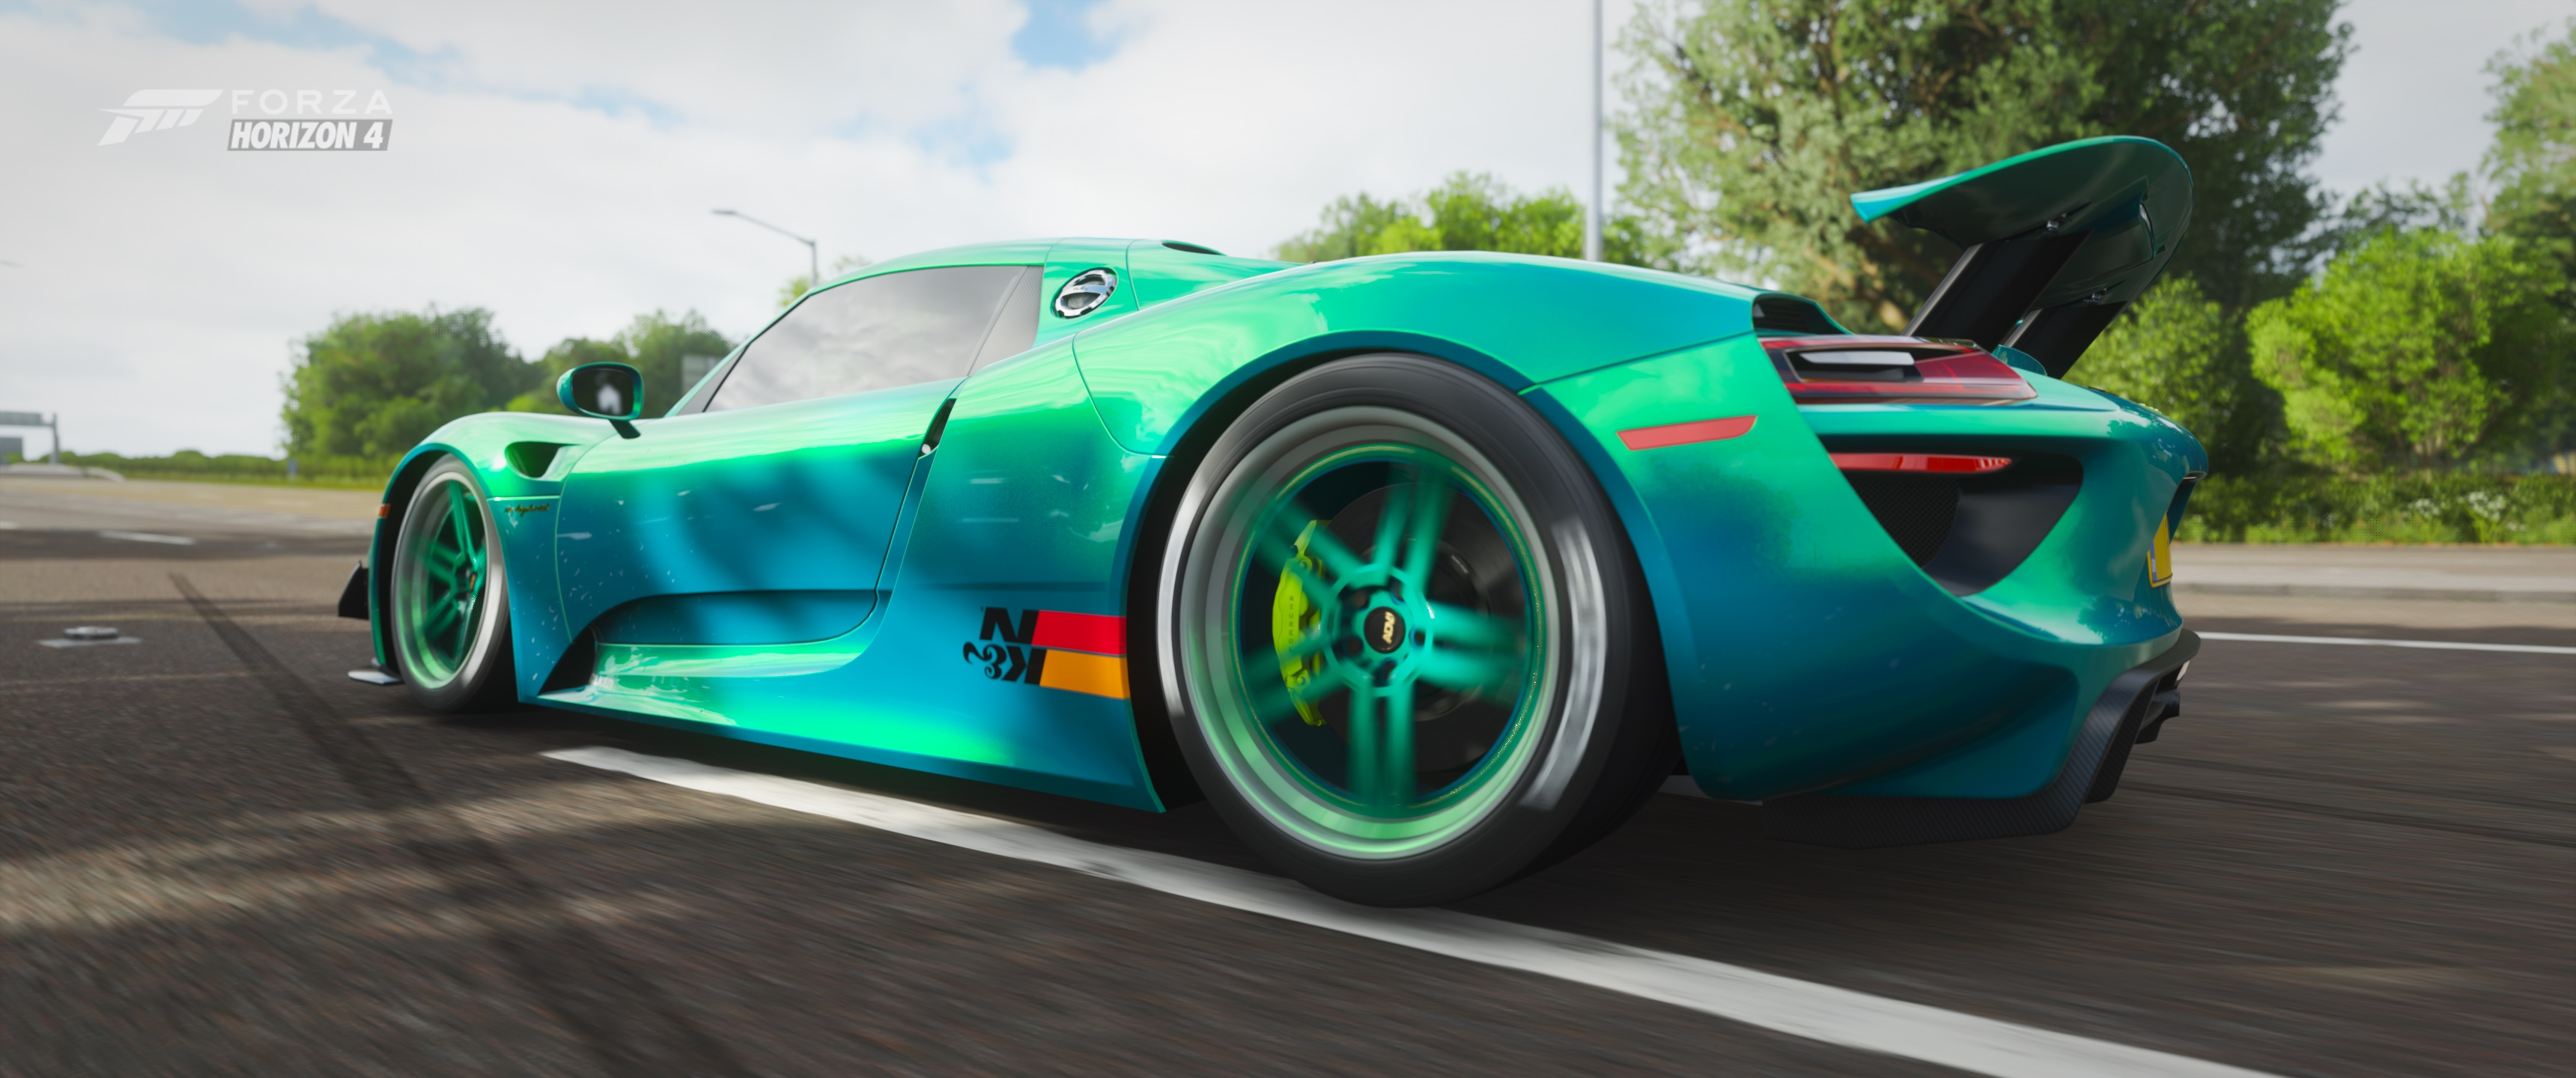 Porsche 918 Spyder Forza Forza Horizon 4 Racing Video Games Ultrawide Gaming Ultrawide Car 3440x1440